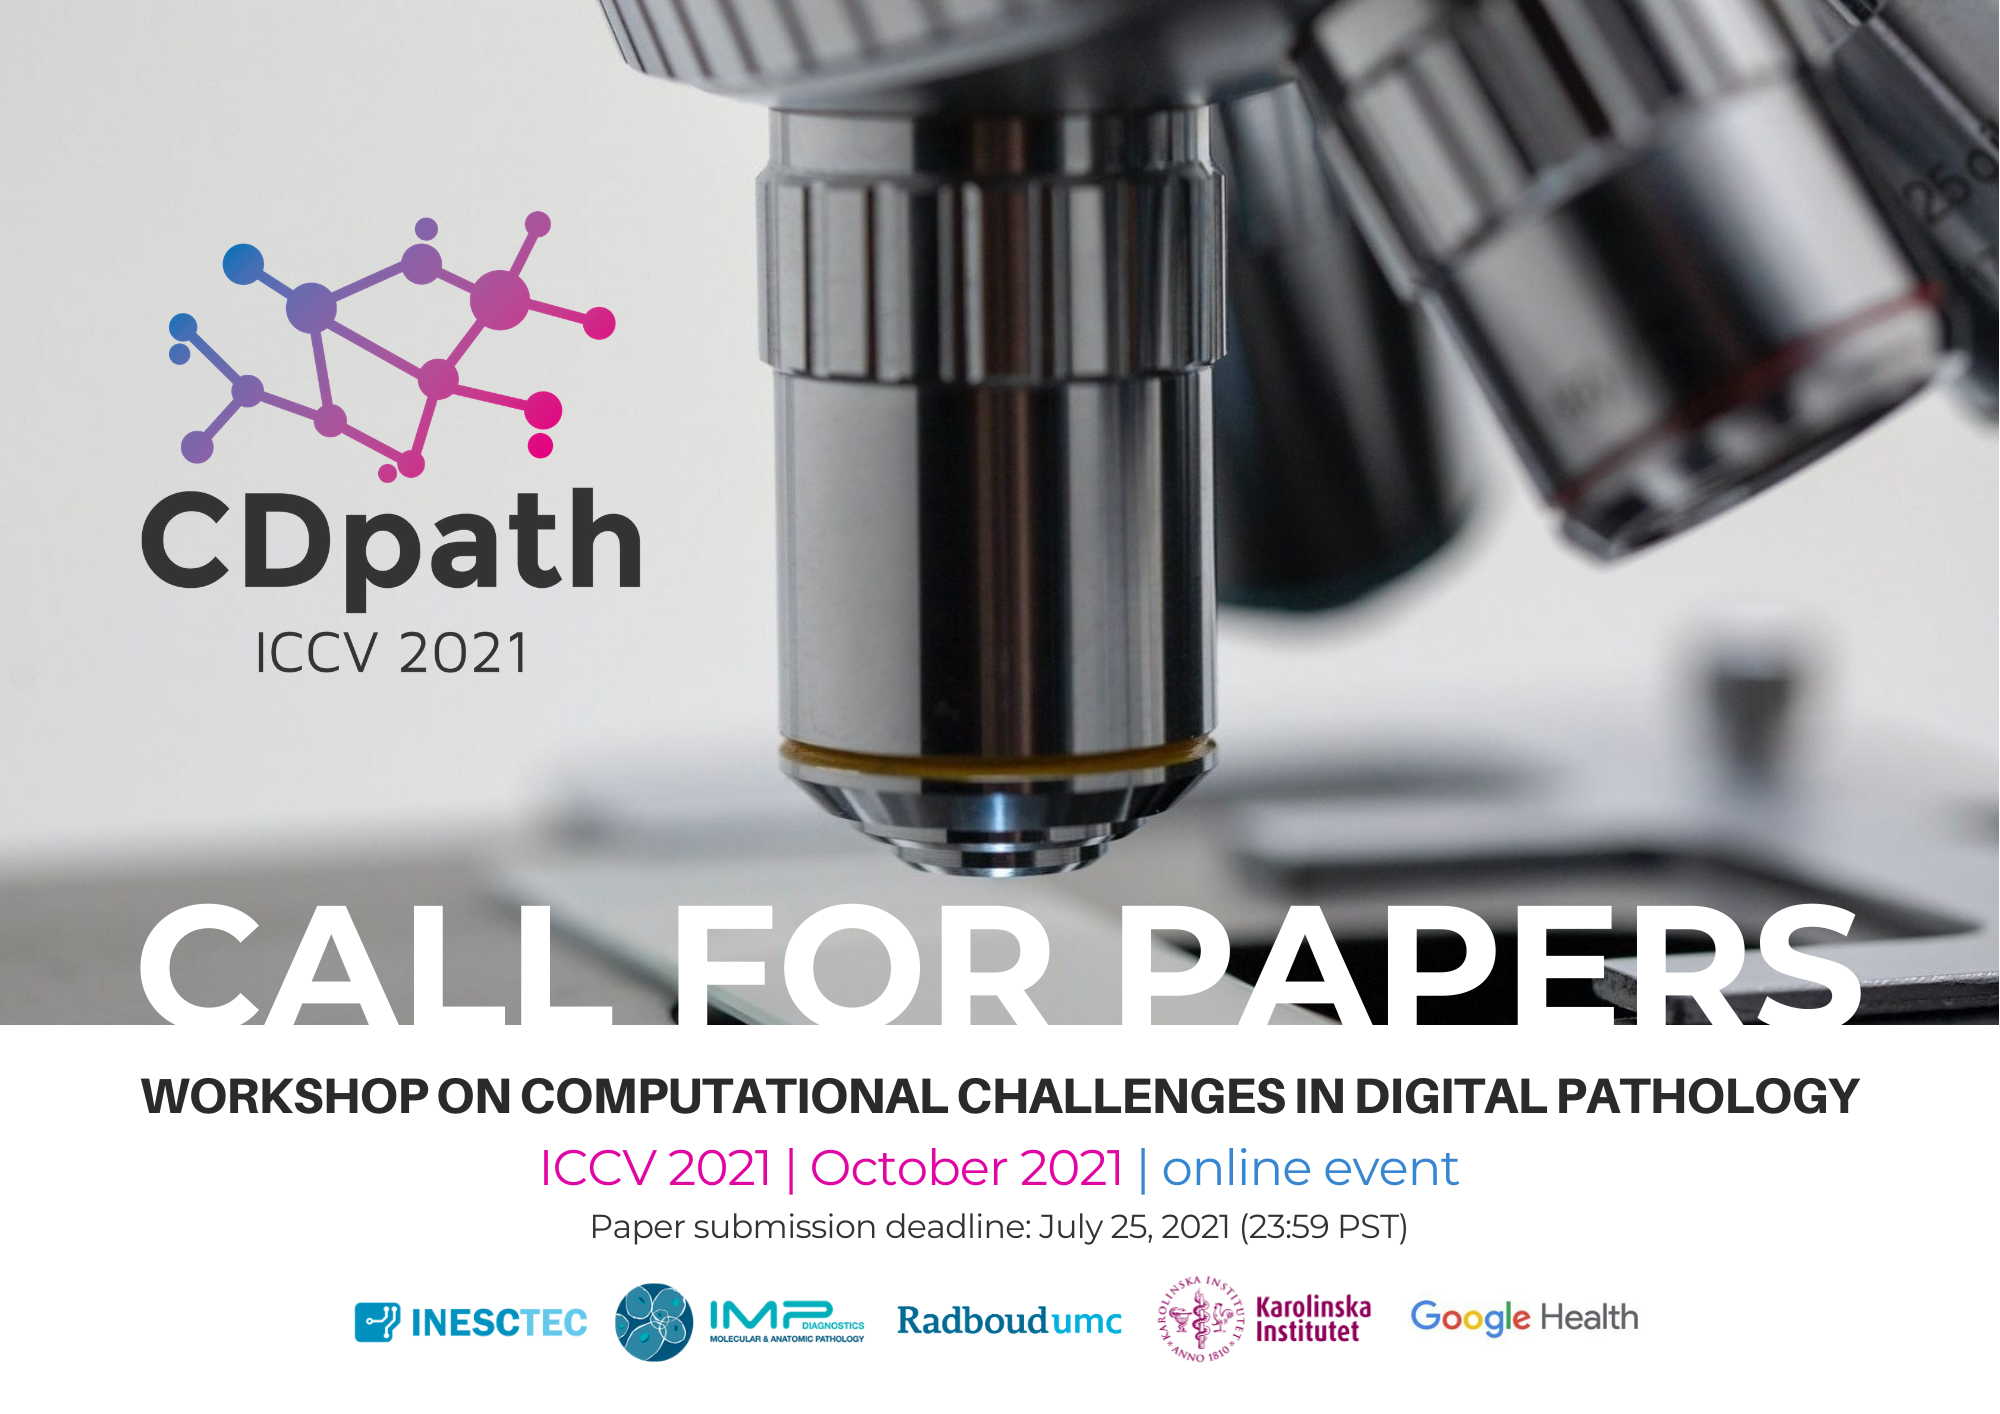 ICCV 2021 on Computational Challenges in Digital Pathology